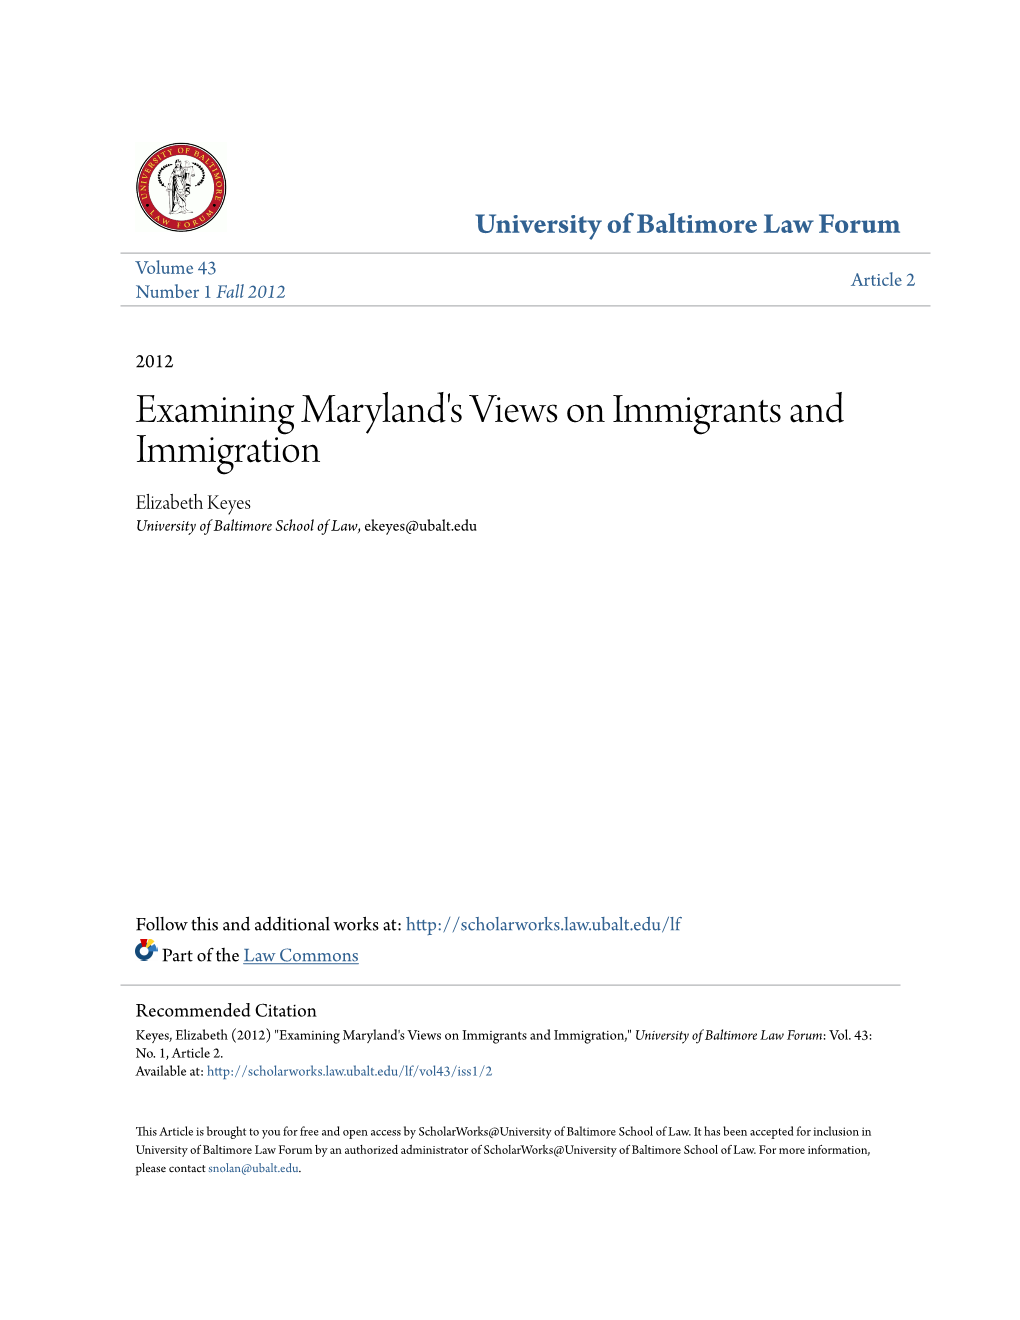 Examining Maryland's Views on Immigrants and Immigration Elizabeth Keyes University of Baltimore School of Law, Ekeyes@Ubalt.Edu